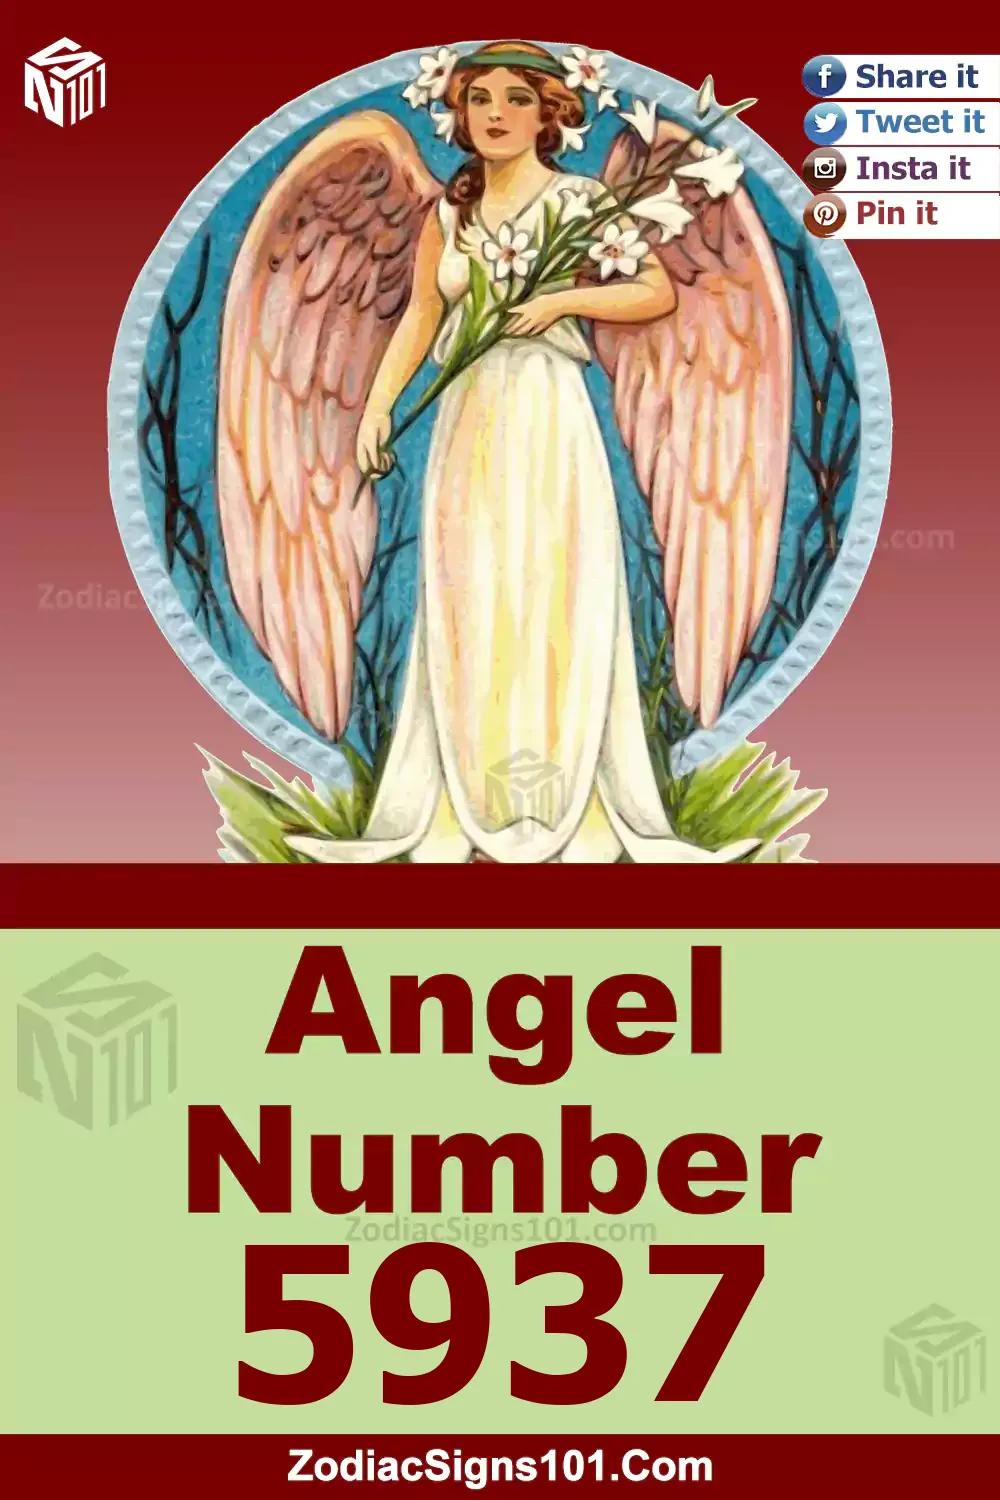 5937-Angel-Number-Meaning.jpg